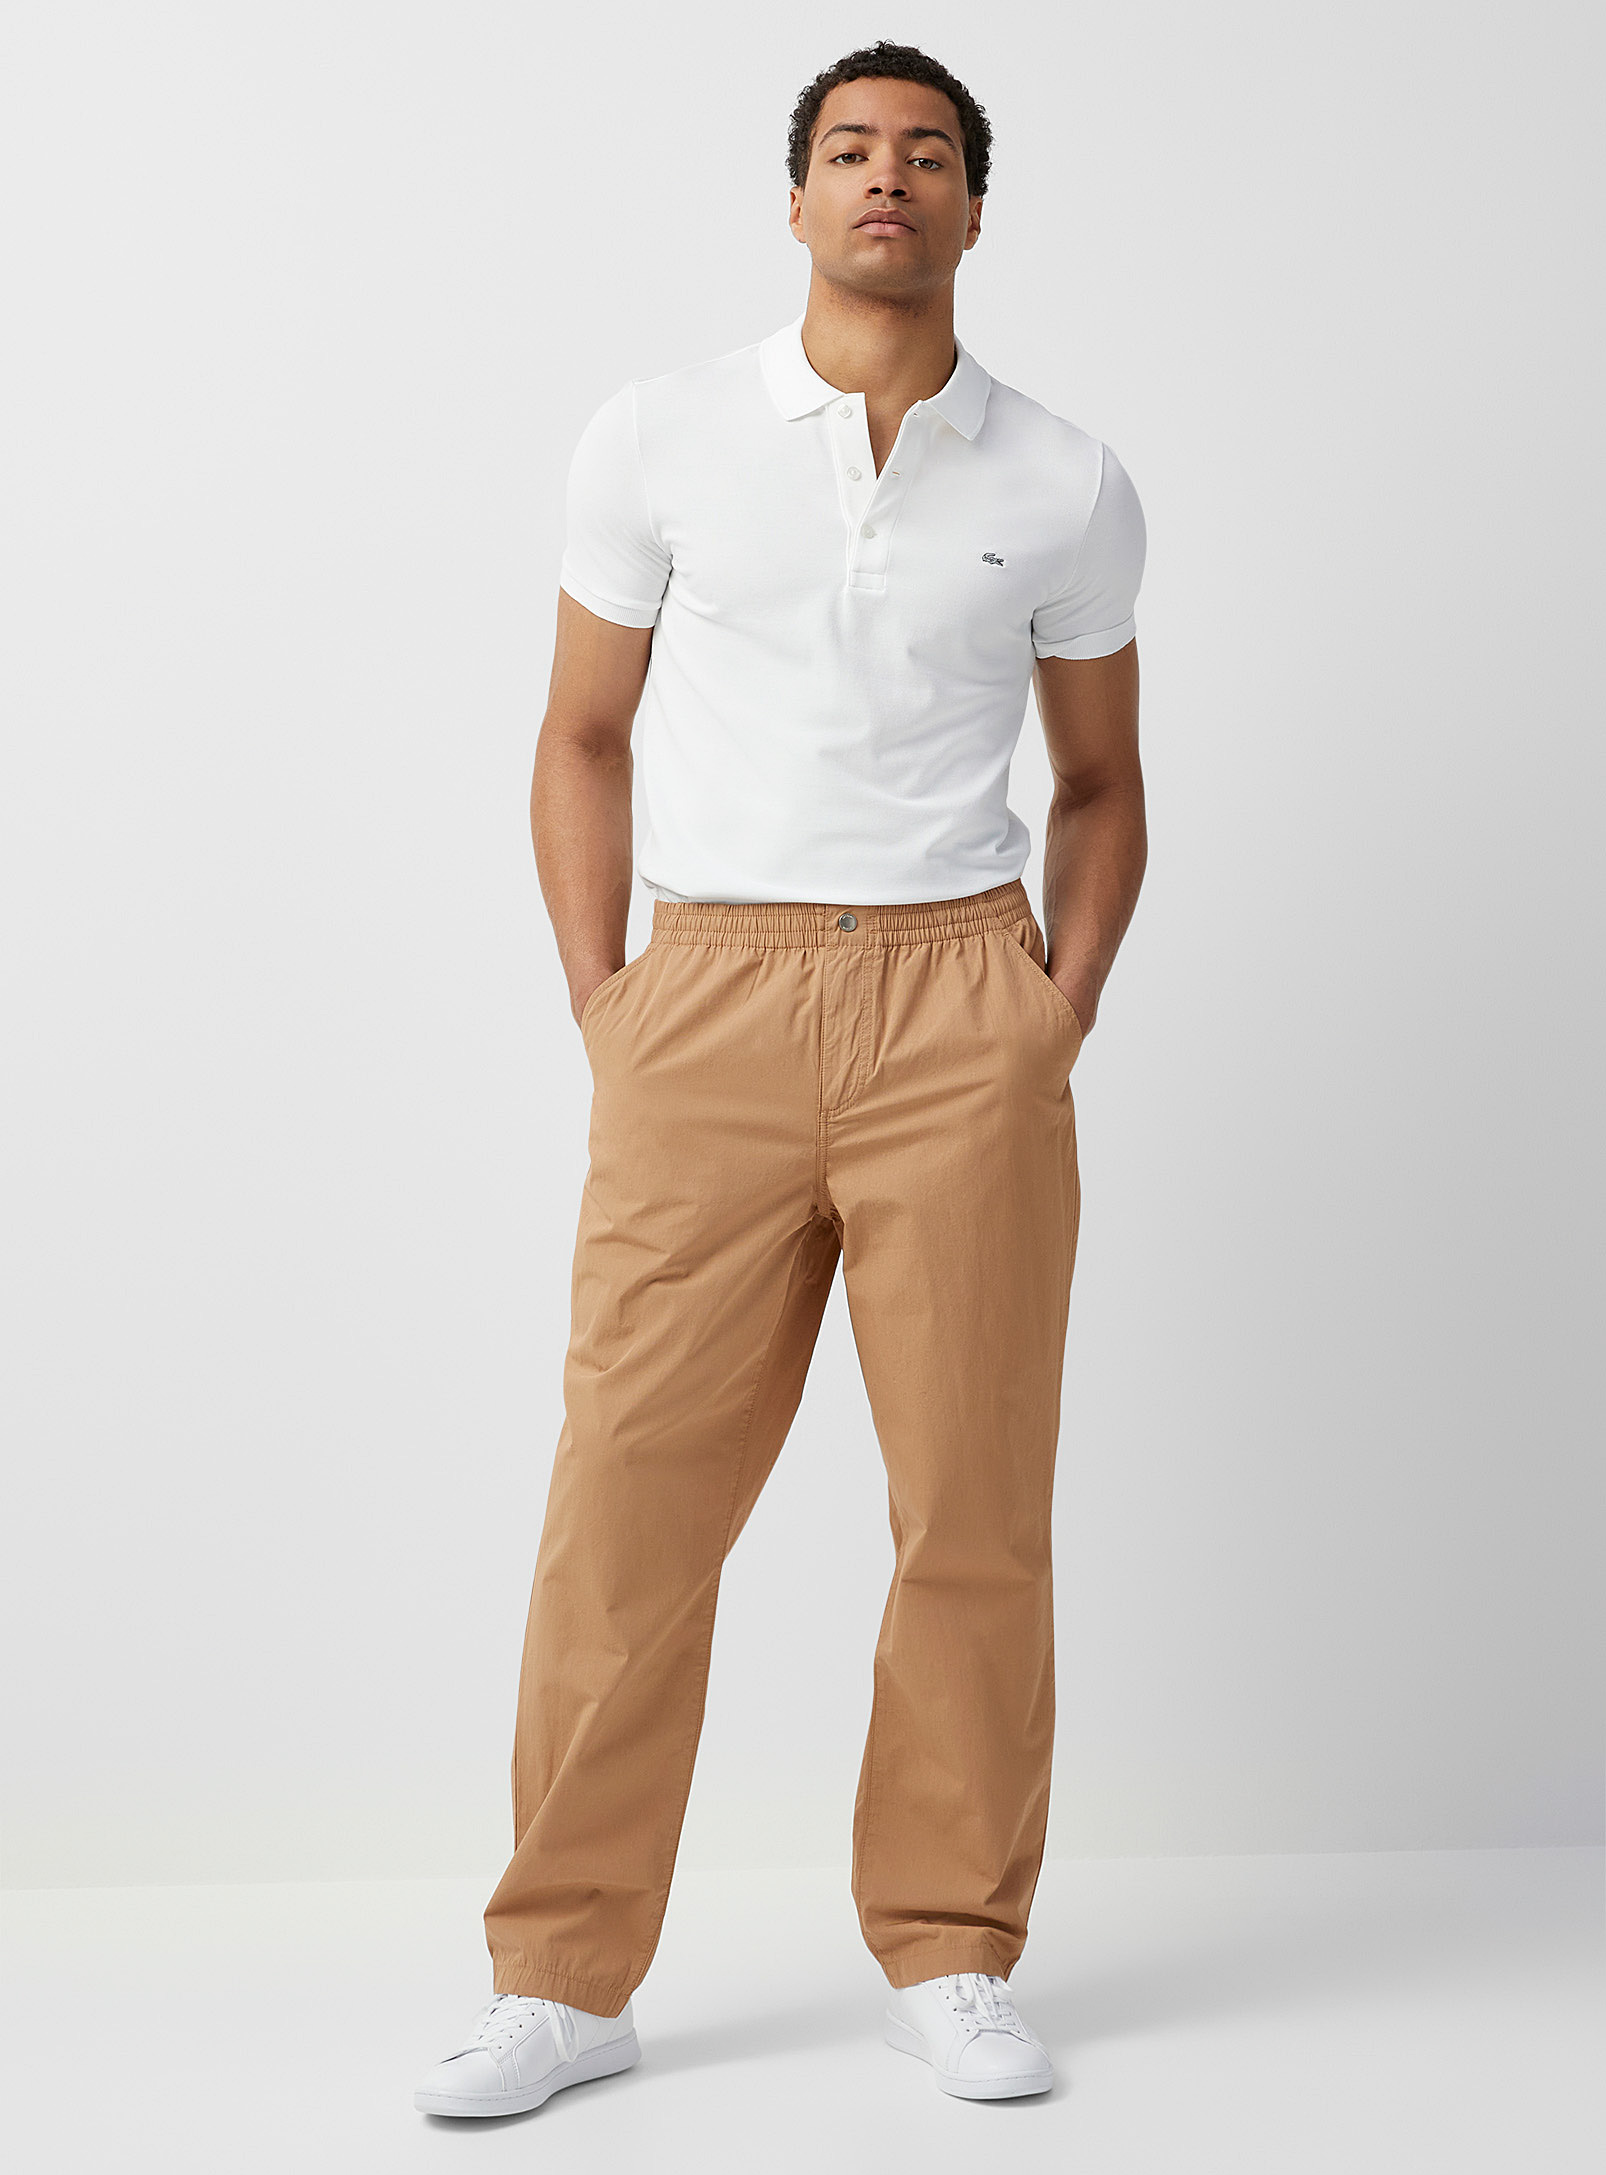 Lacoste - Men's Lightweight comfort-waist pant Loose fit